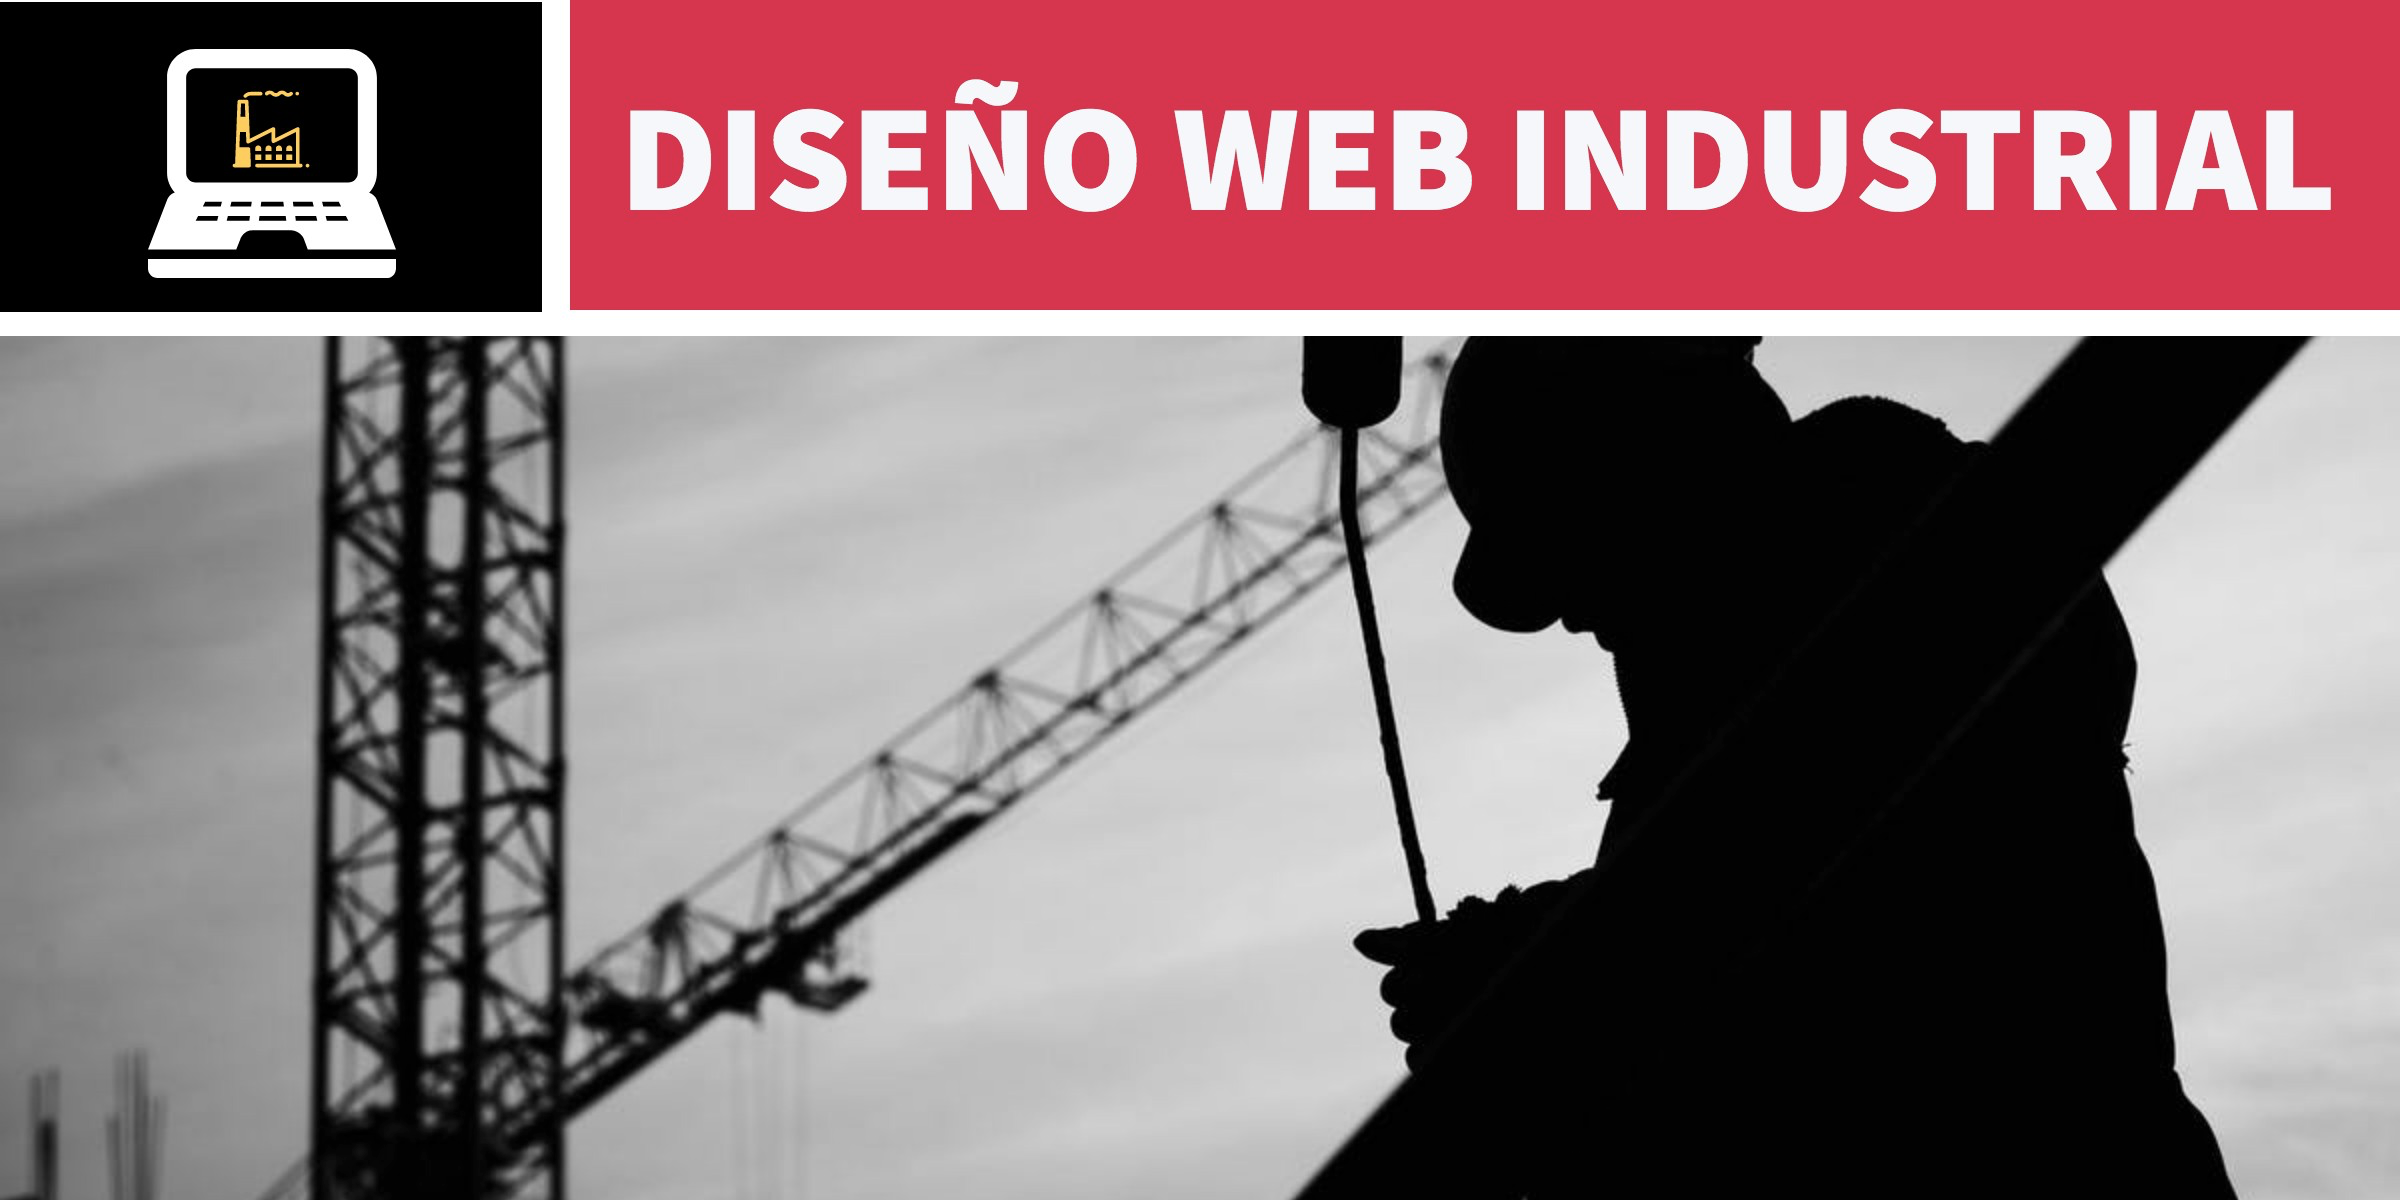 Web industrial